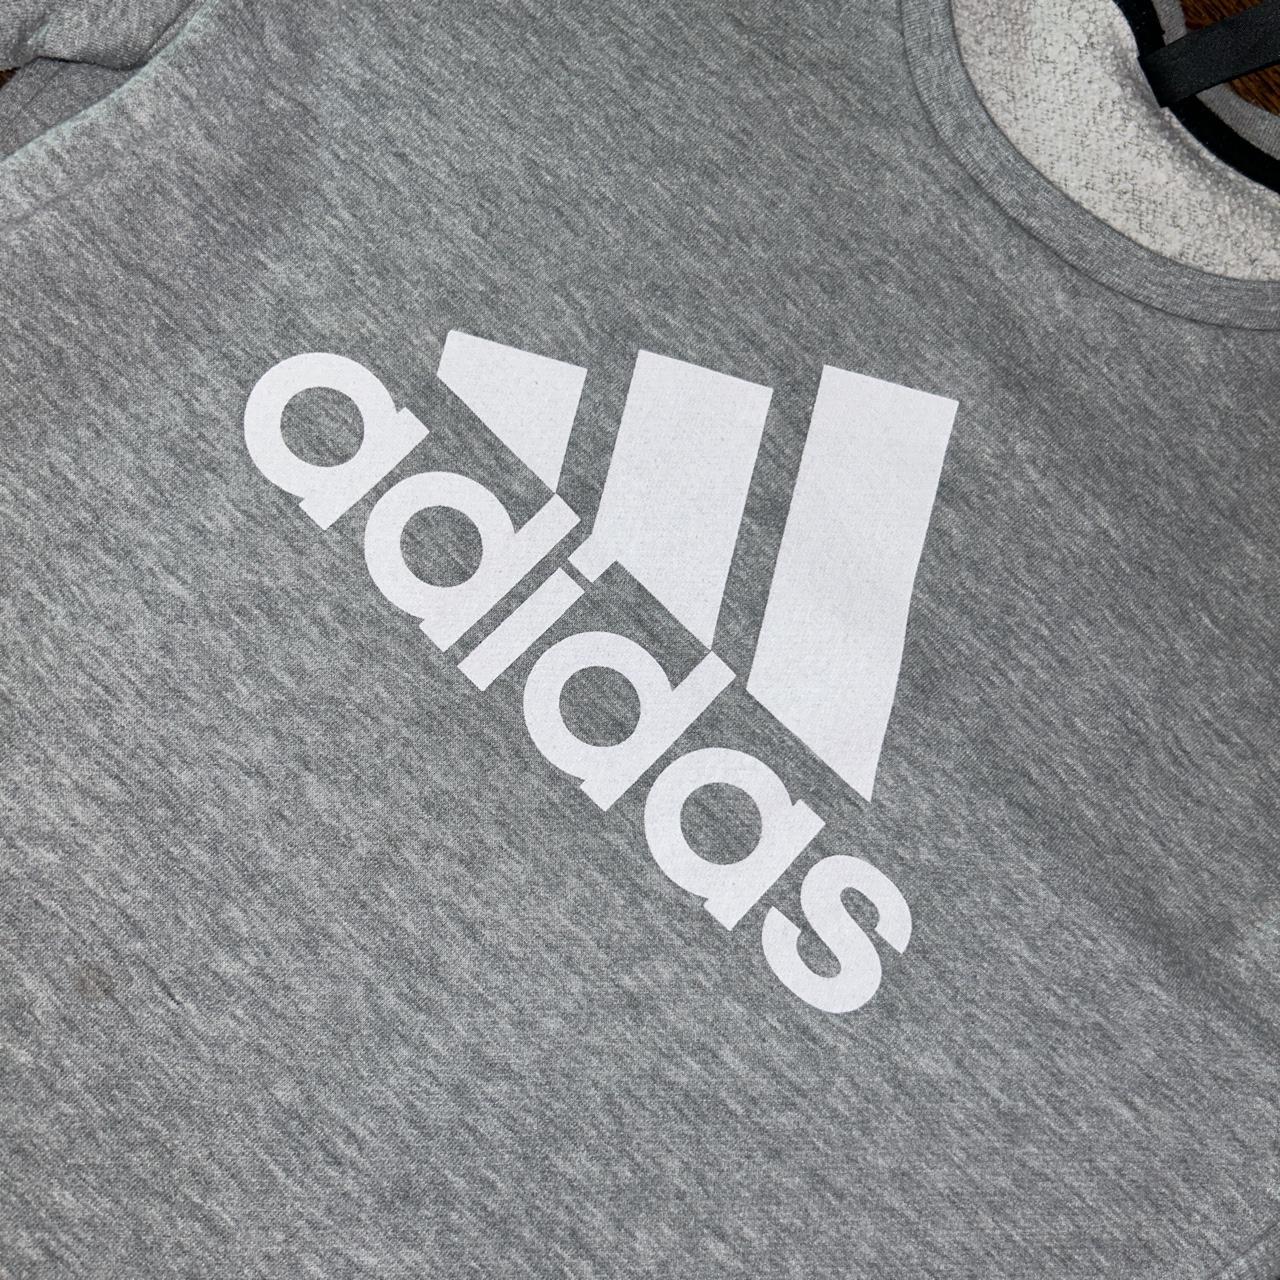 Adidas Grey Sweatshirt / Men’s Medium / 100% Cotton... - Depop